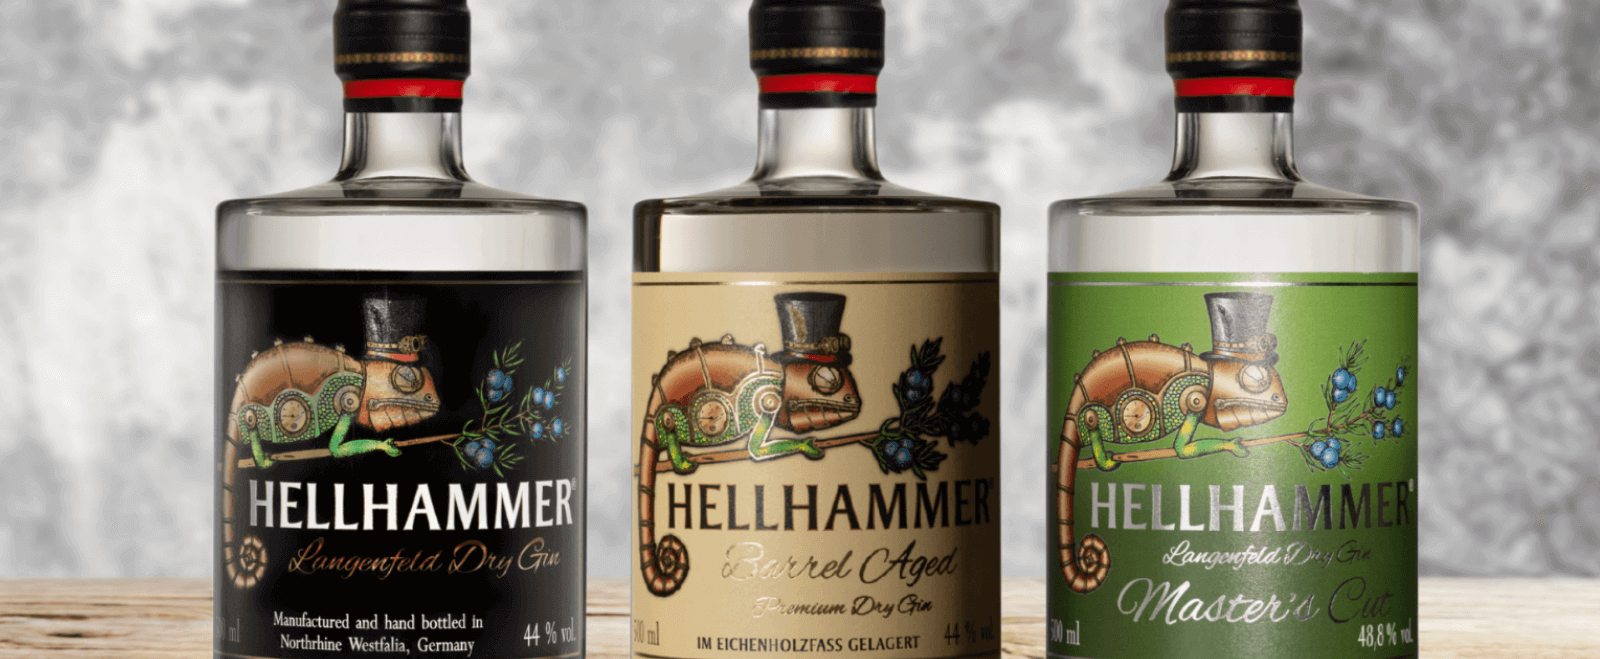 Hellhammer Gin aus Langenfeld - lexoffice Community Interview